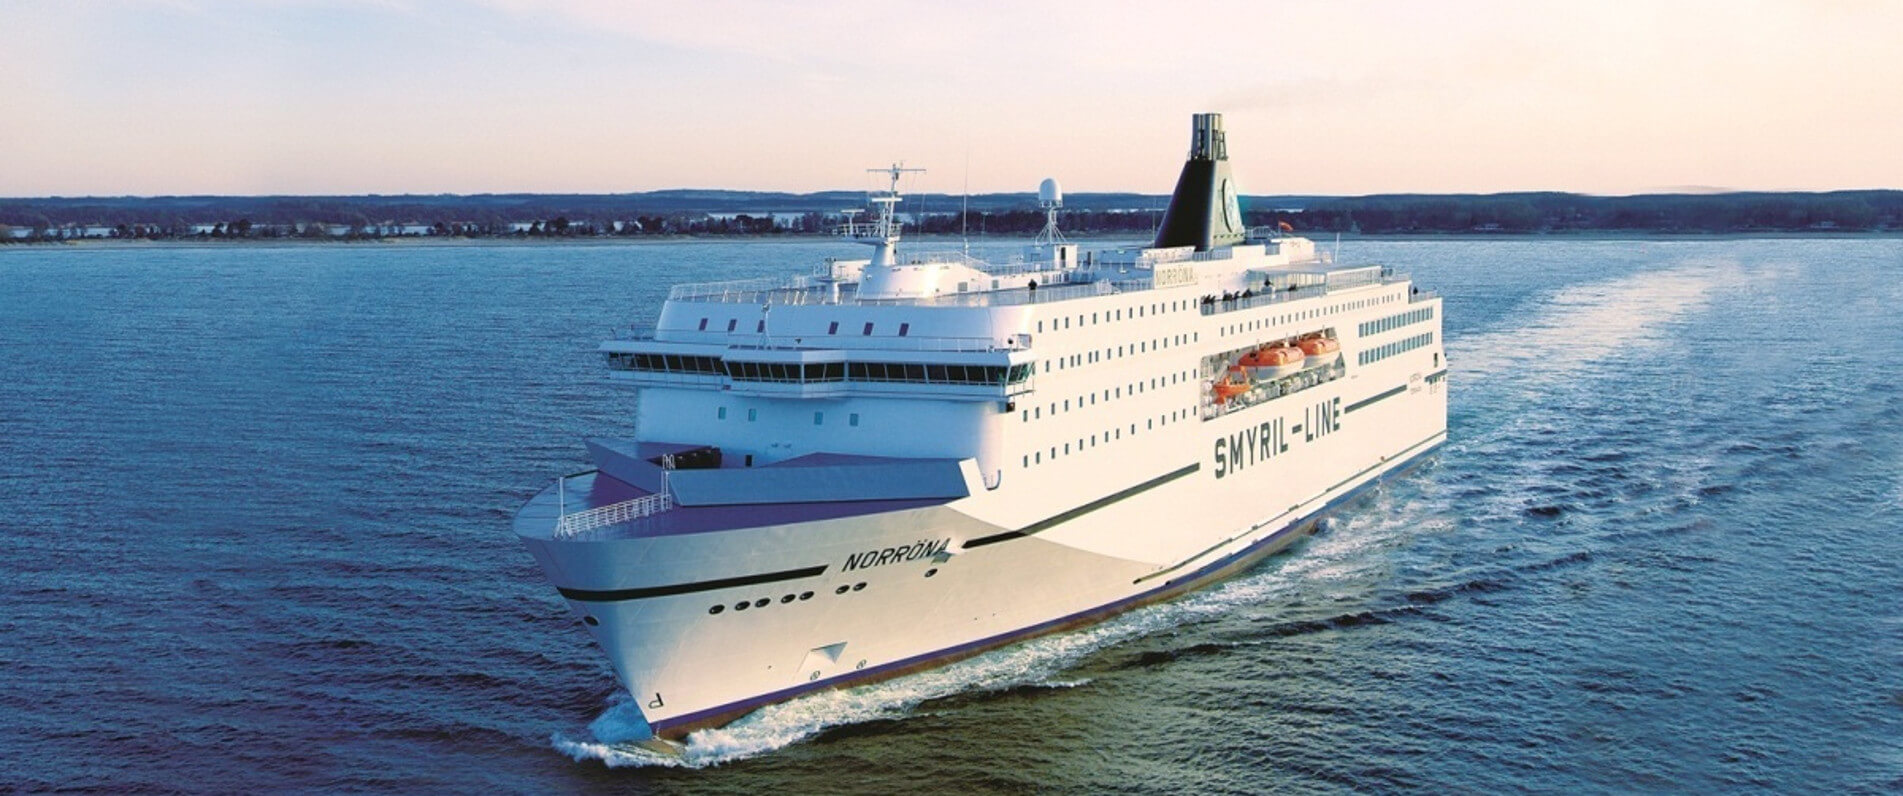 Conceptual_Design_of_ferry_MS_Norrona_Knud_E_Hansen.jpg